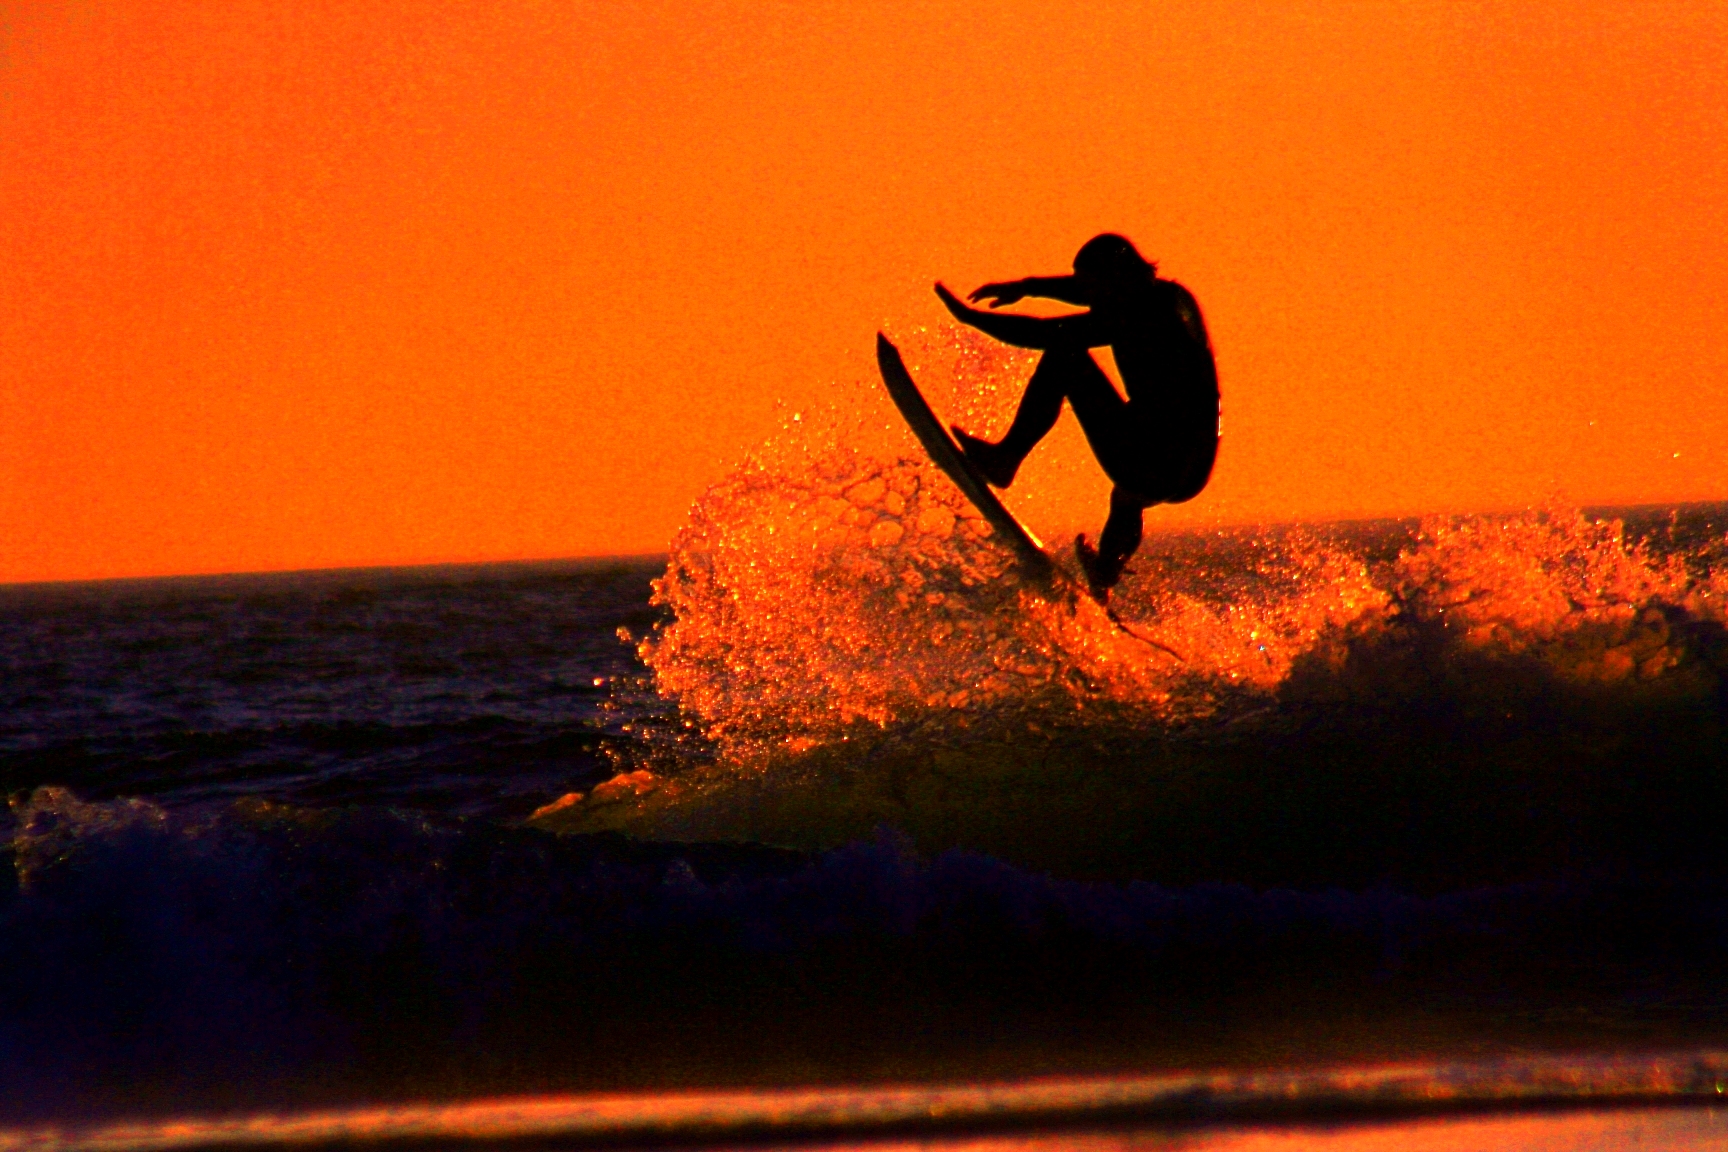 Sunset surfer photo